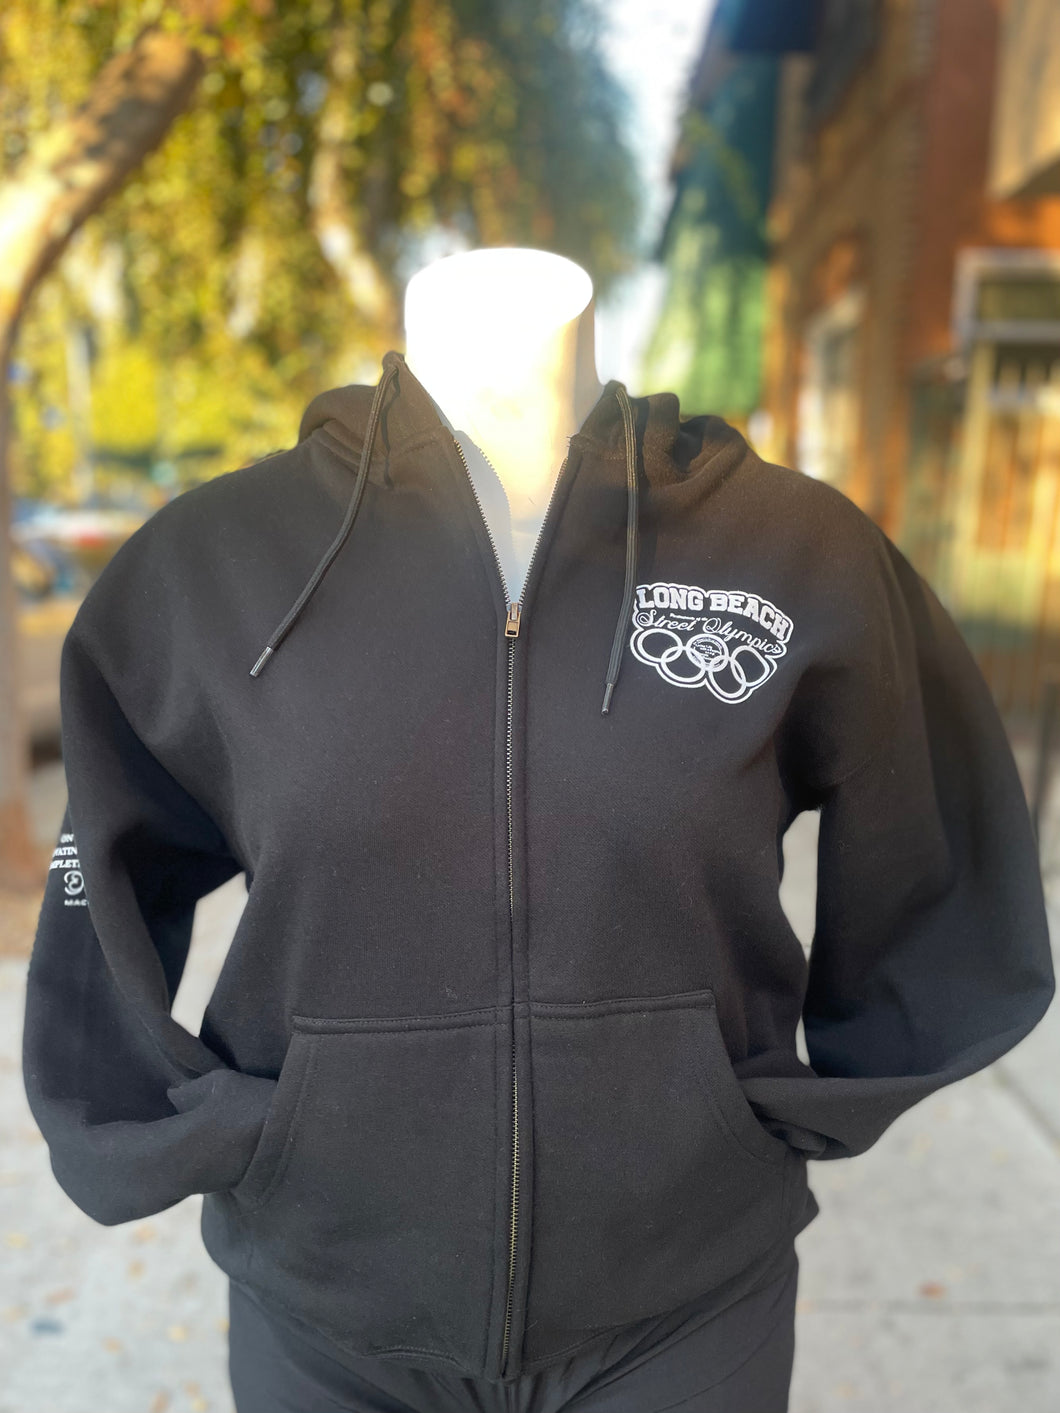 Long Beach Street Olympics zip up hoodies